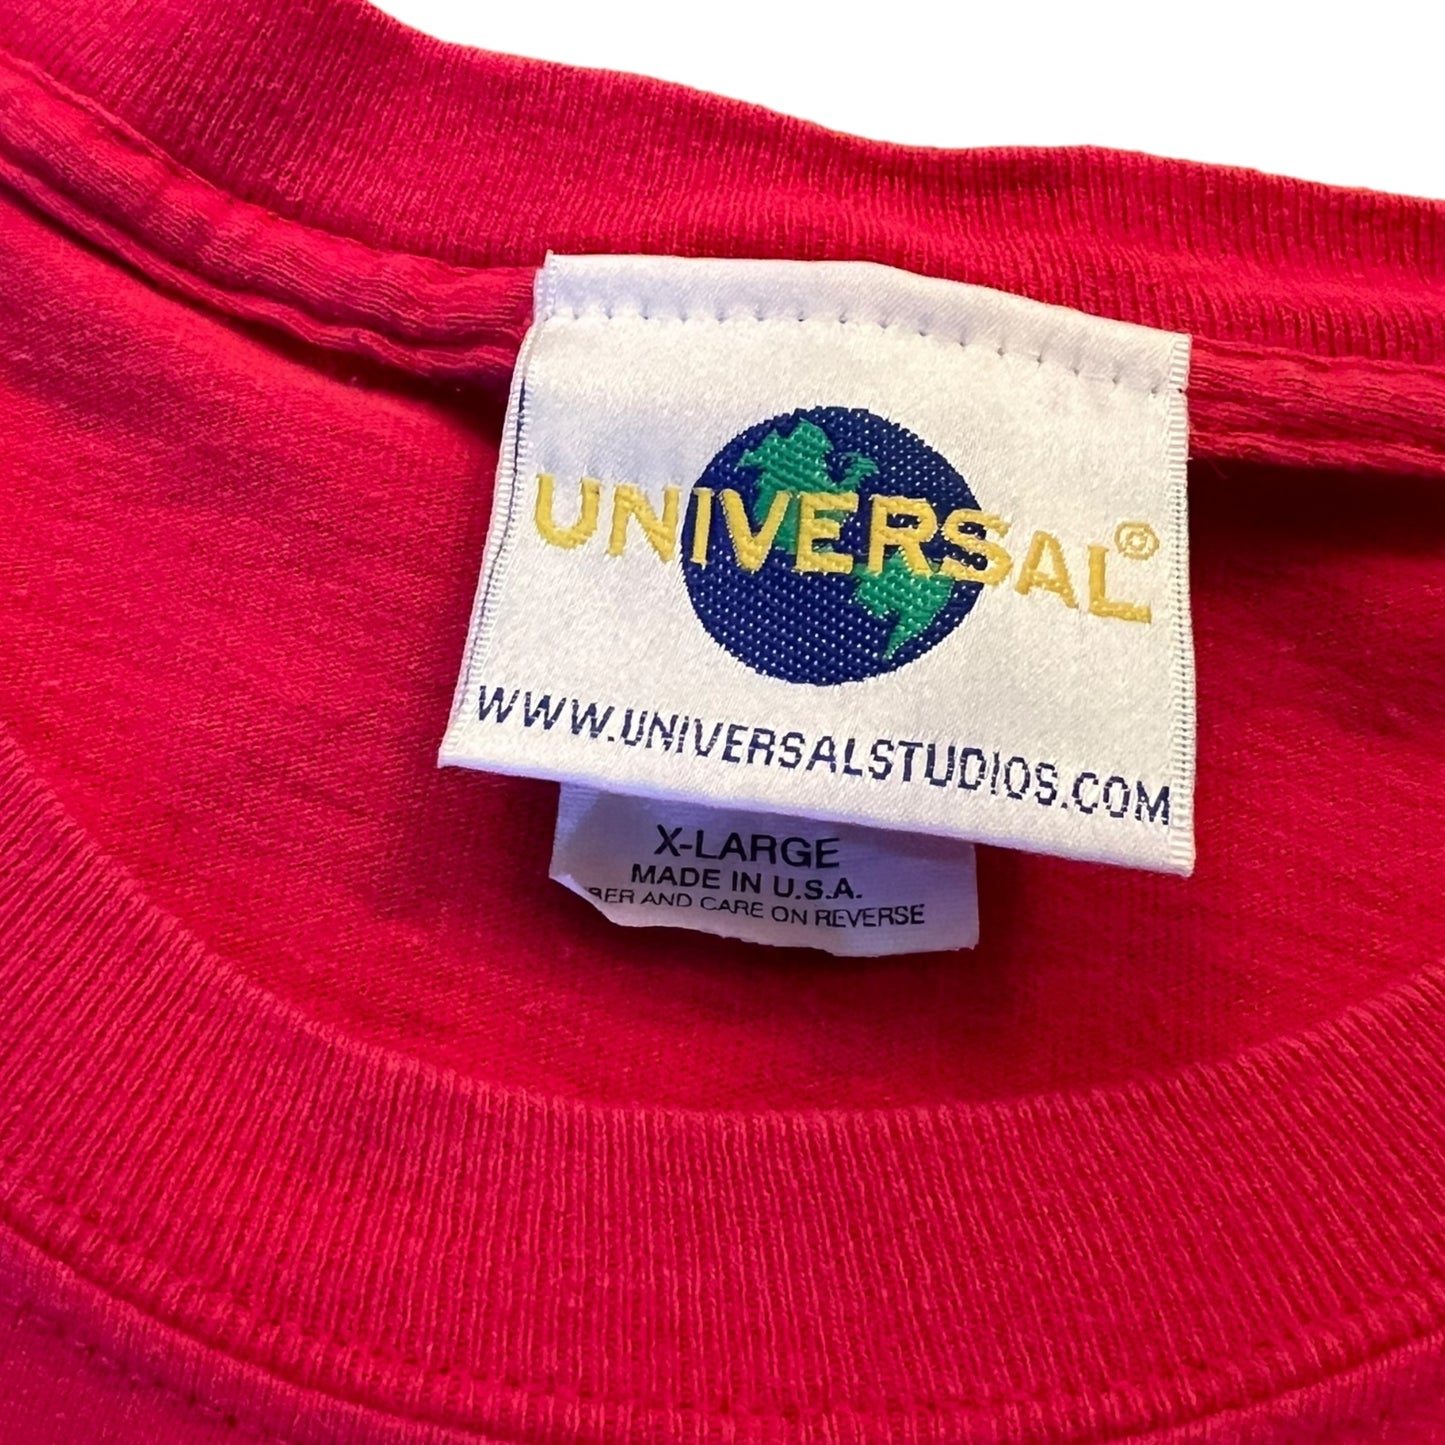 Vintage Universal Studios Tee - XL